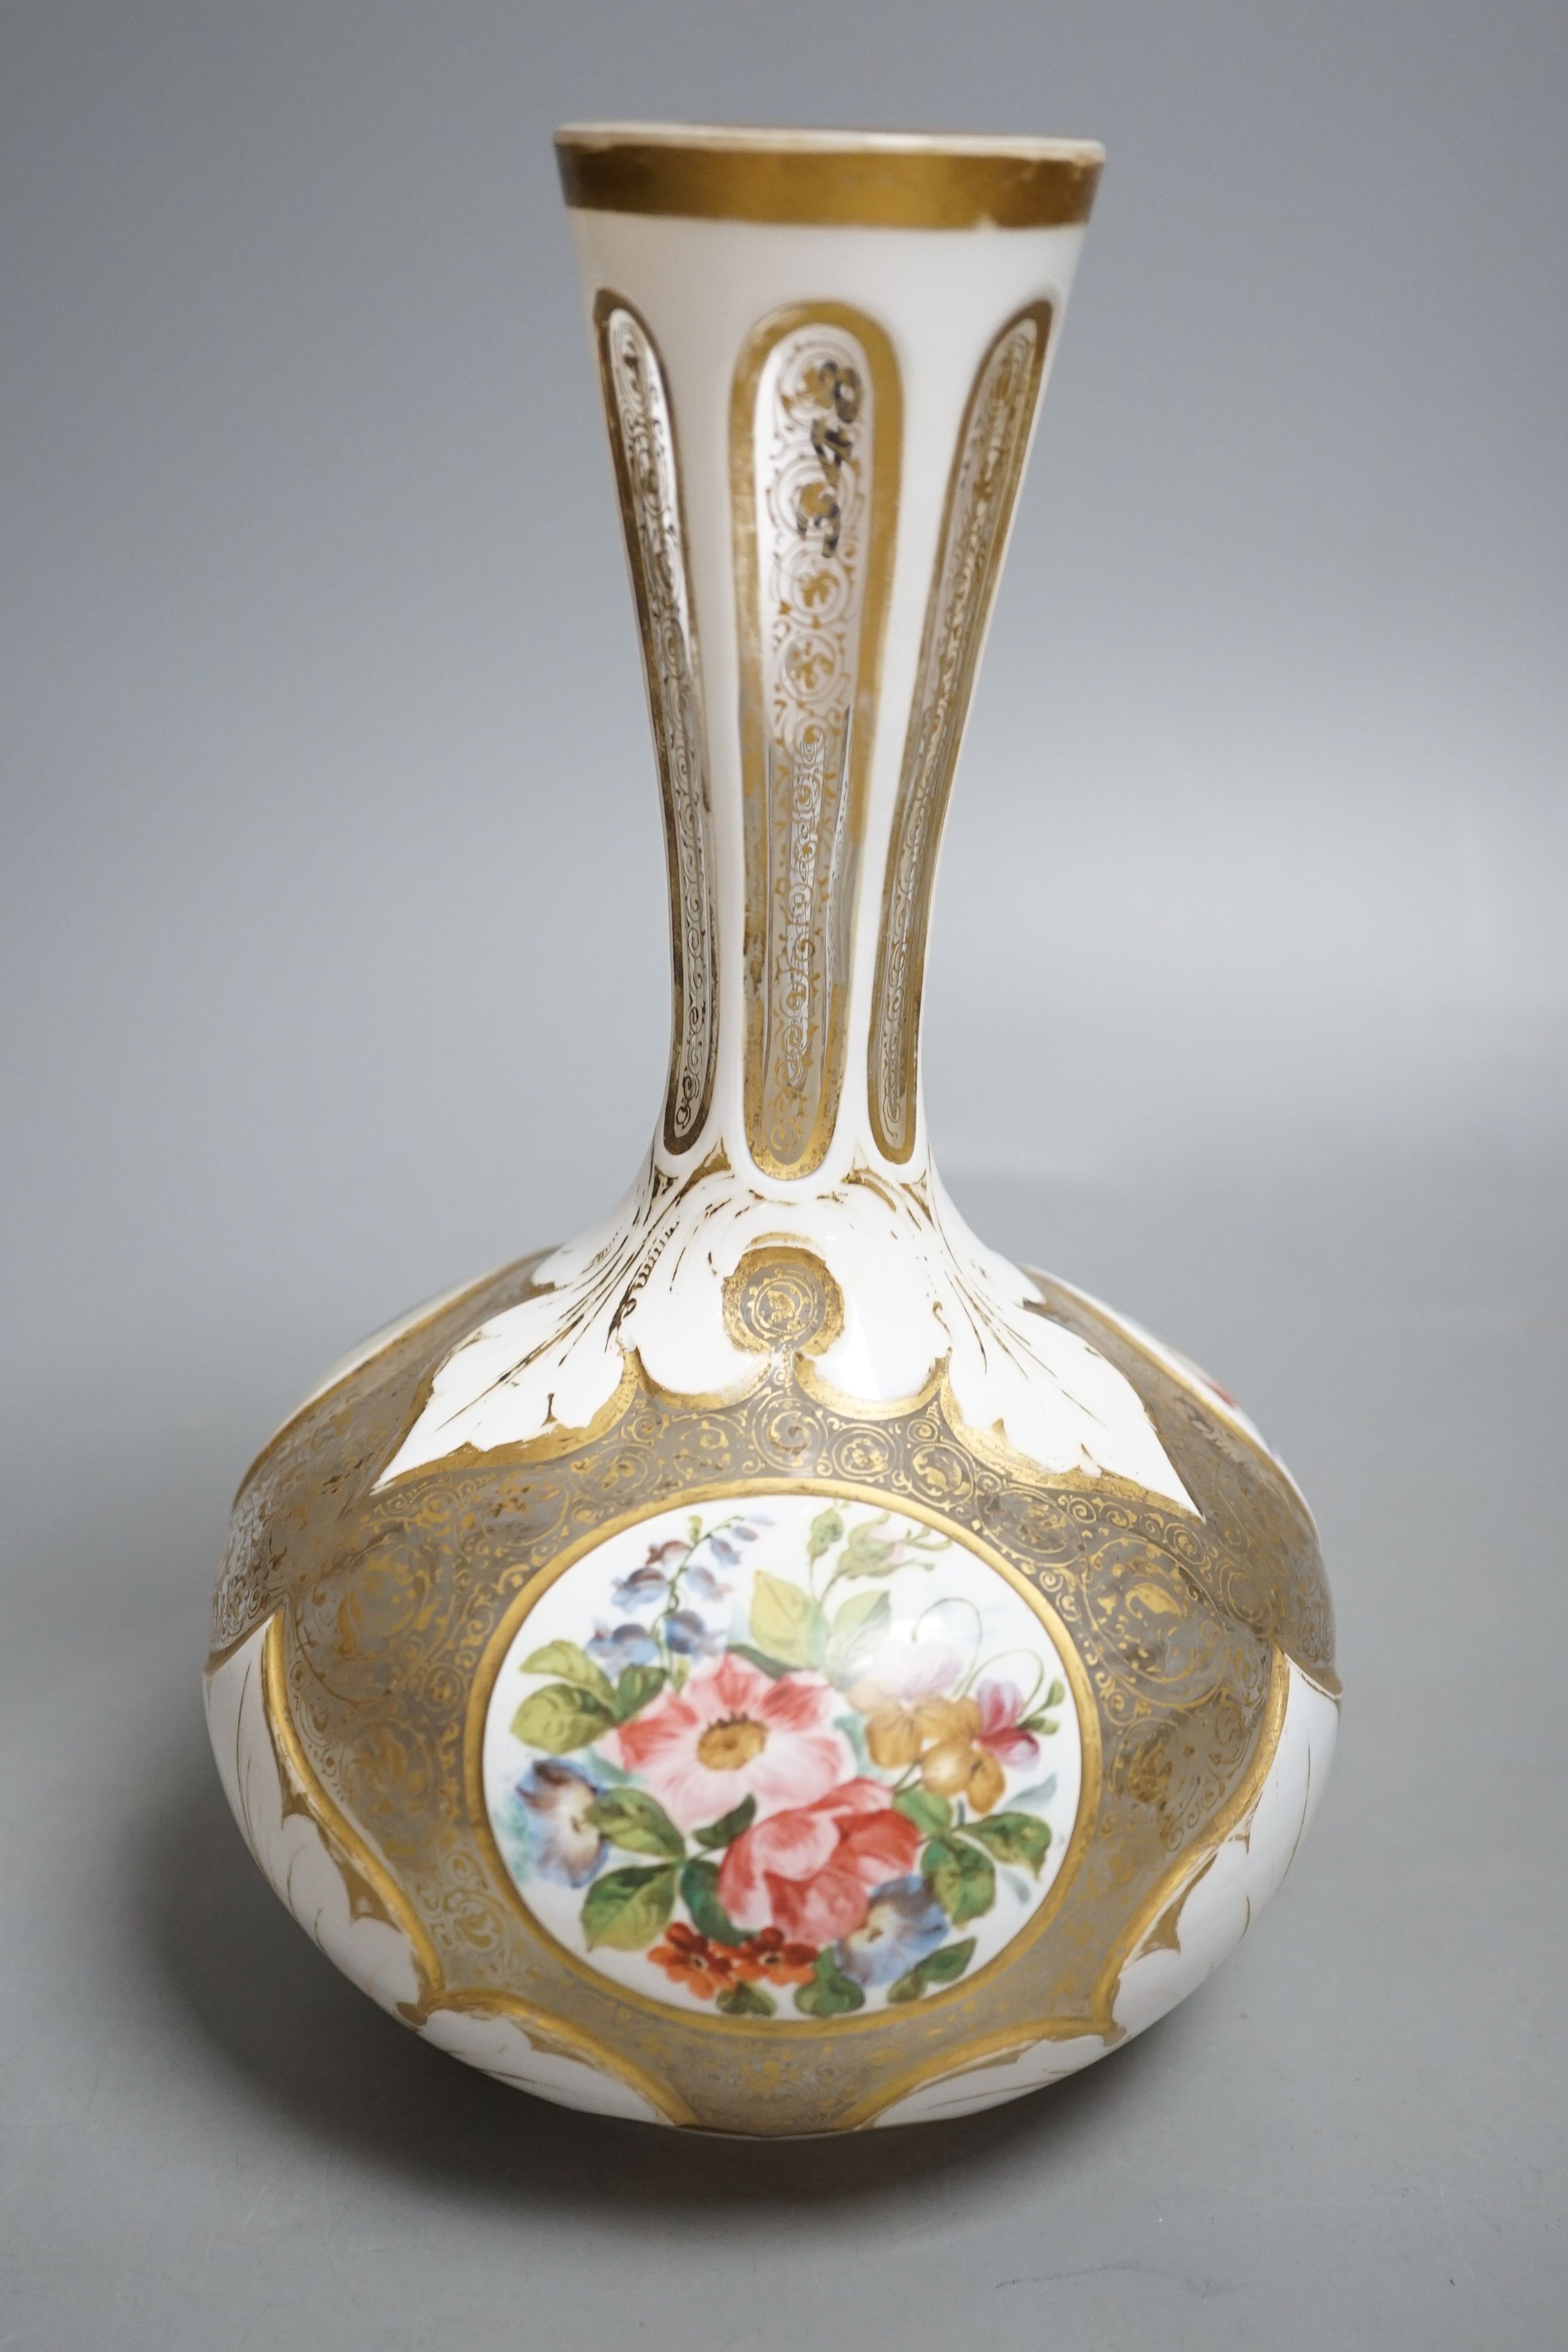 A 19th century Bohemian overlaid glass bottle vase, enamel painted panels - 22cm tall